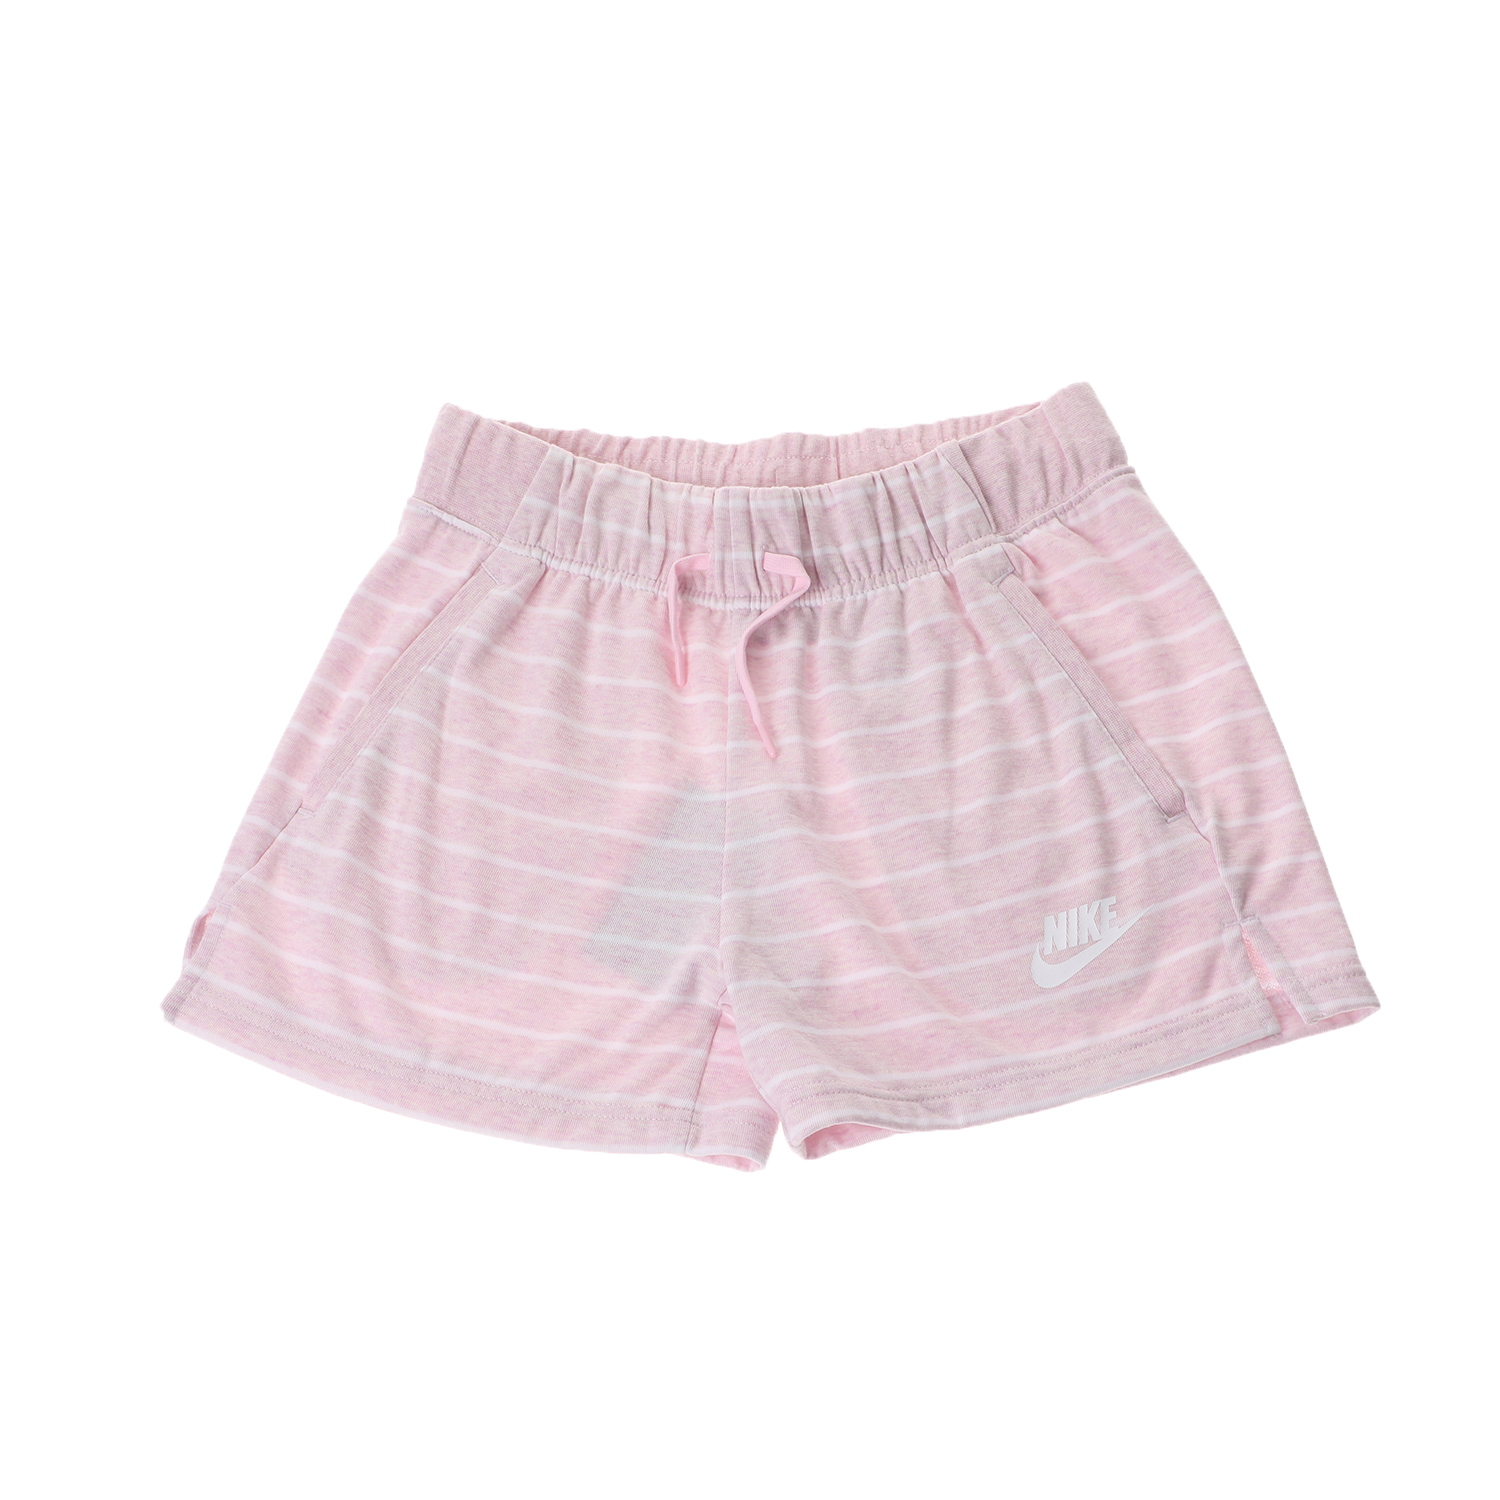 NIKE - Παιδικό αθλητικό σορτς Nike Sportswear ροζ λευκό Παιδικά/Girls/Ρούχα/Σορτς-Βερμούδες